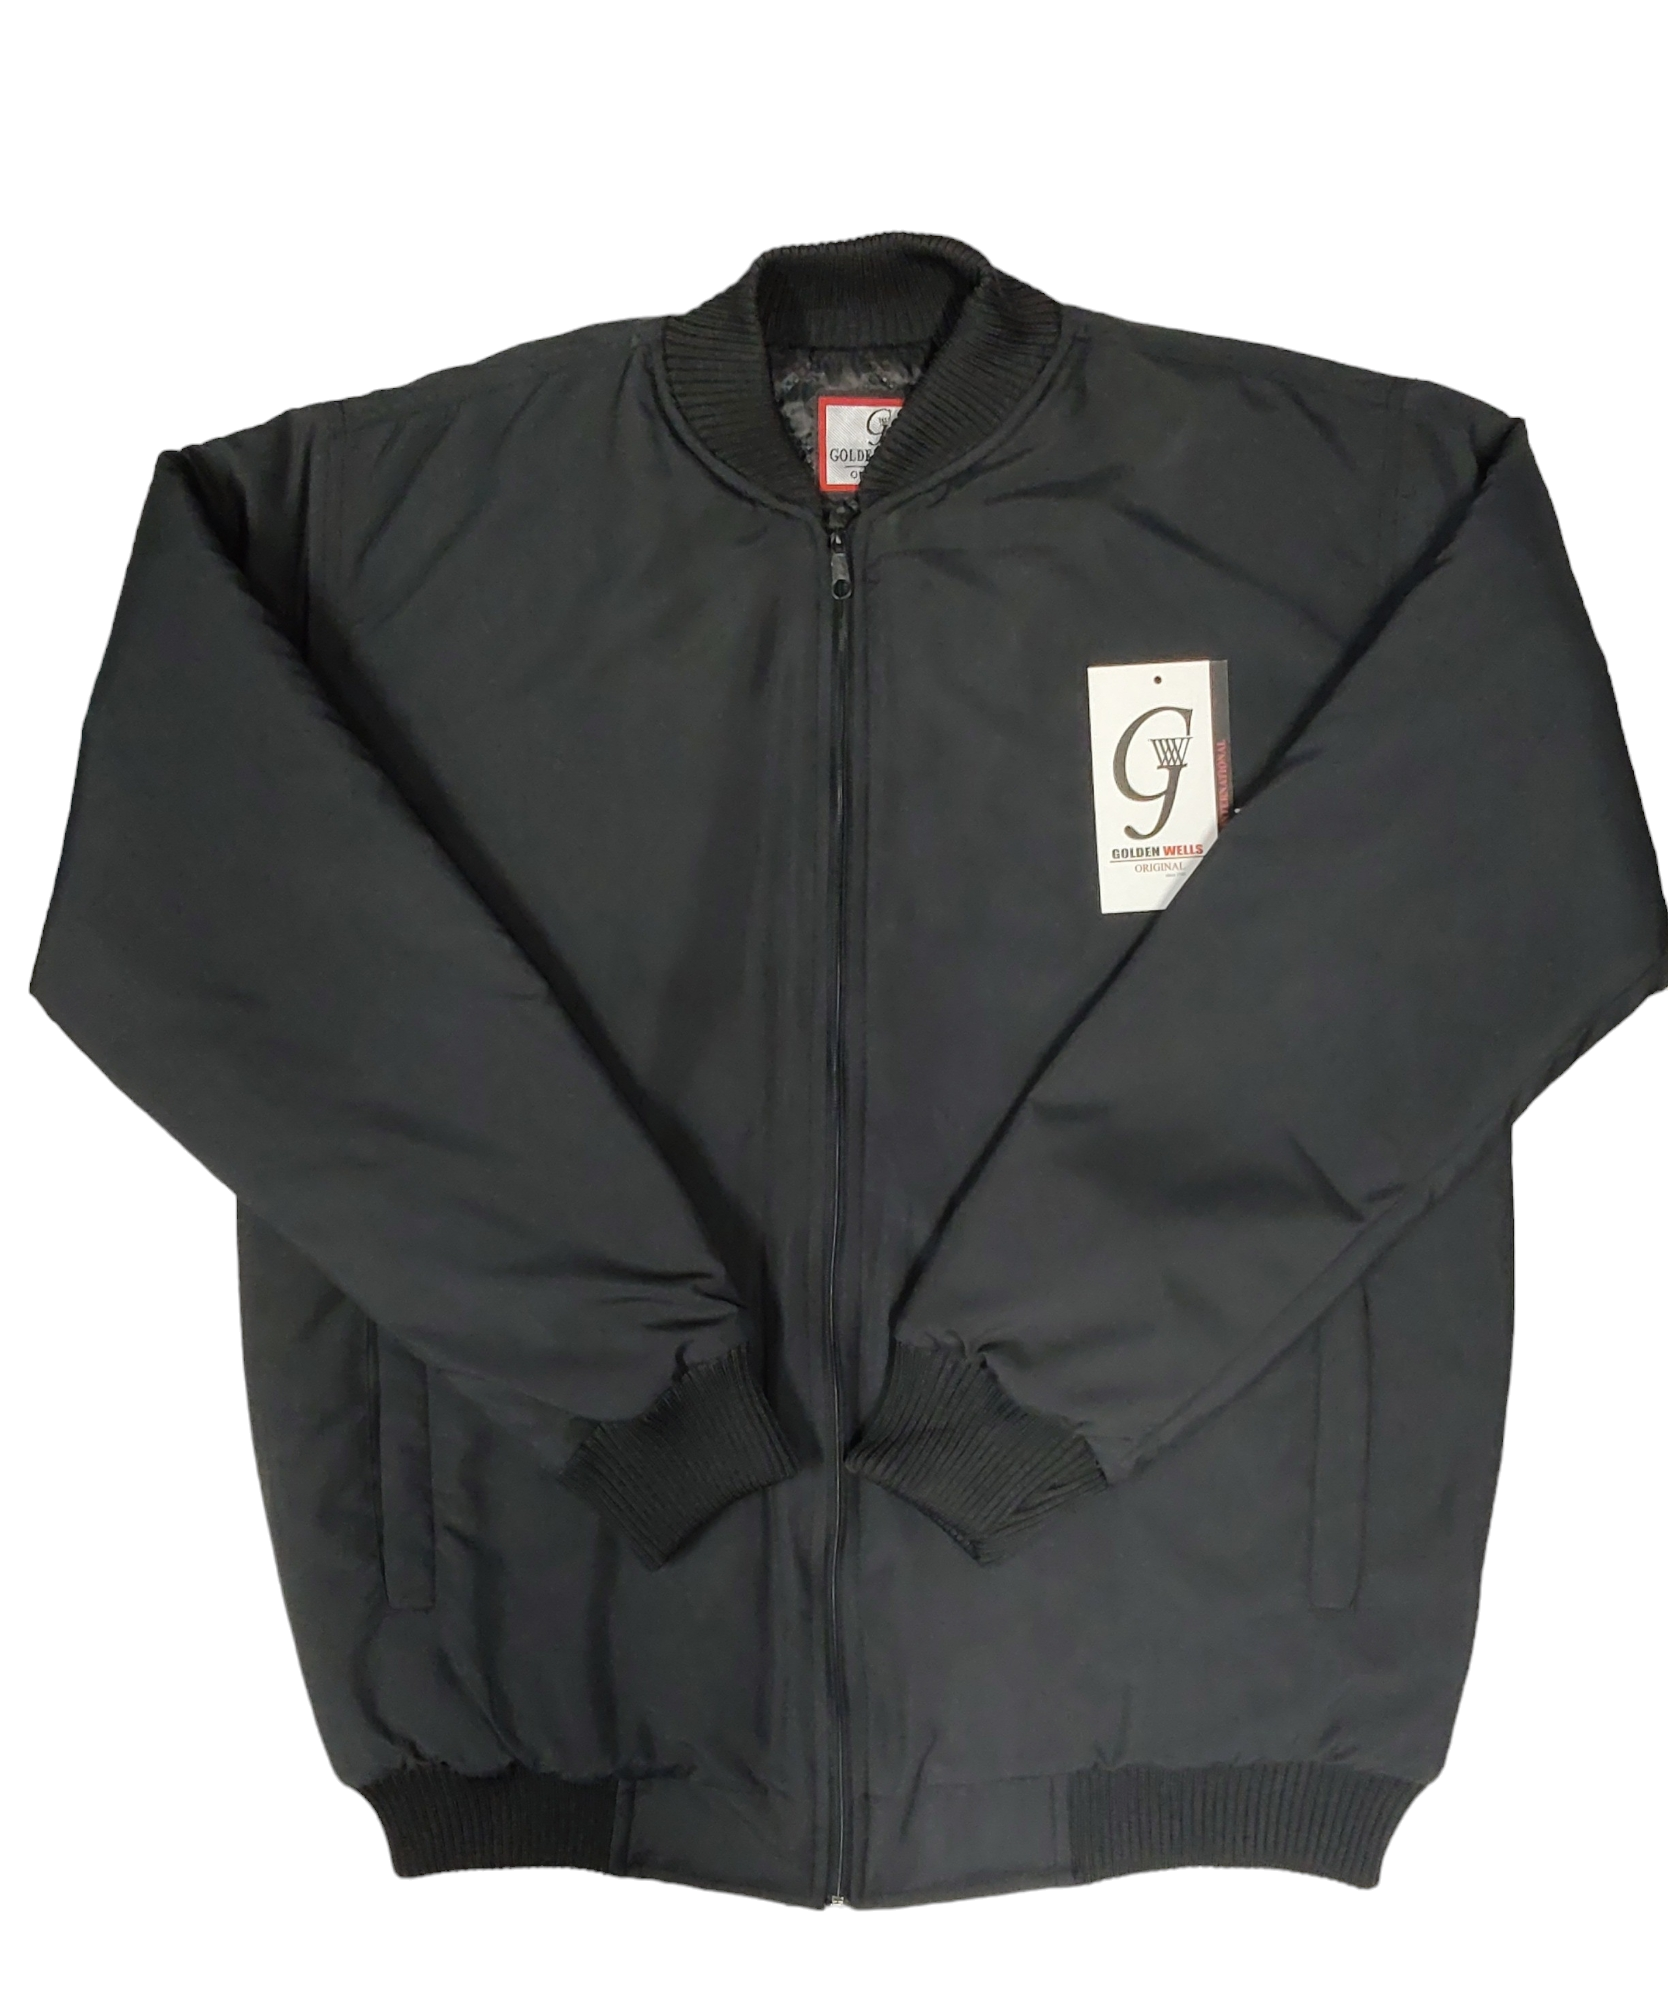 Thermal jacket from Uniform GW – Uniform GW